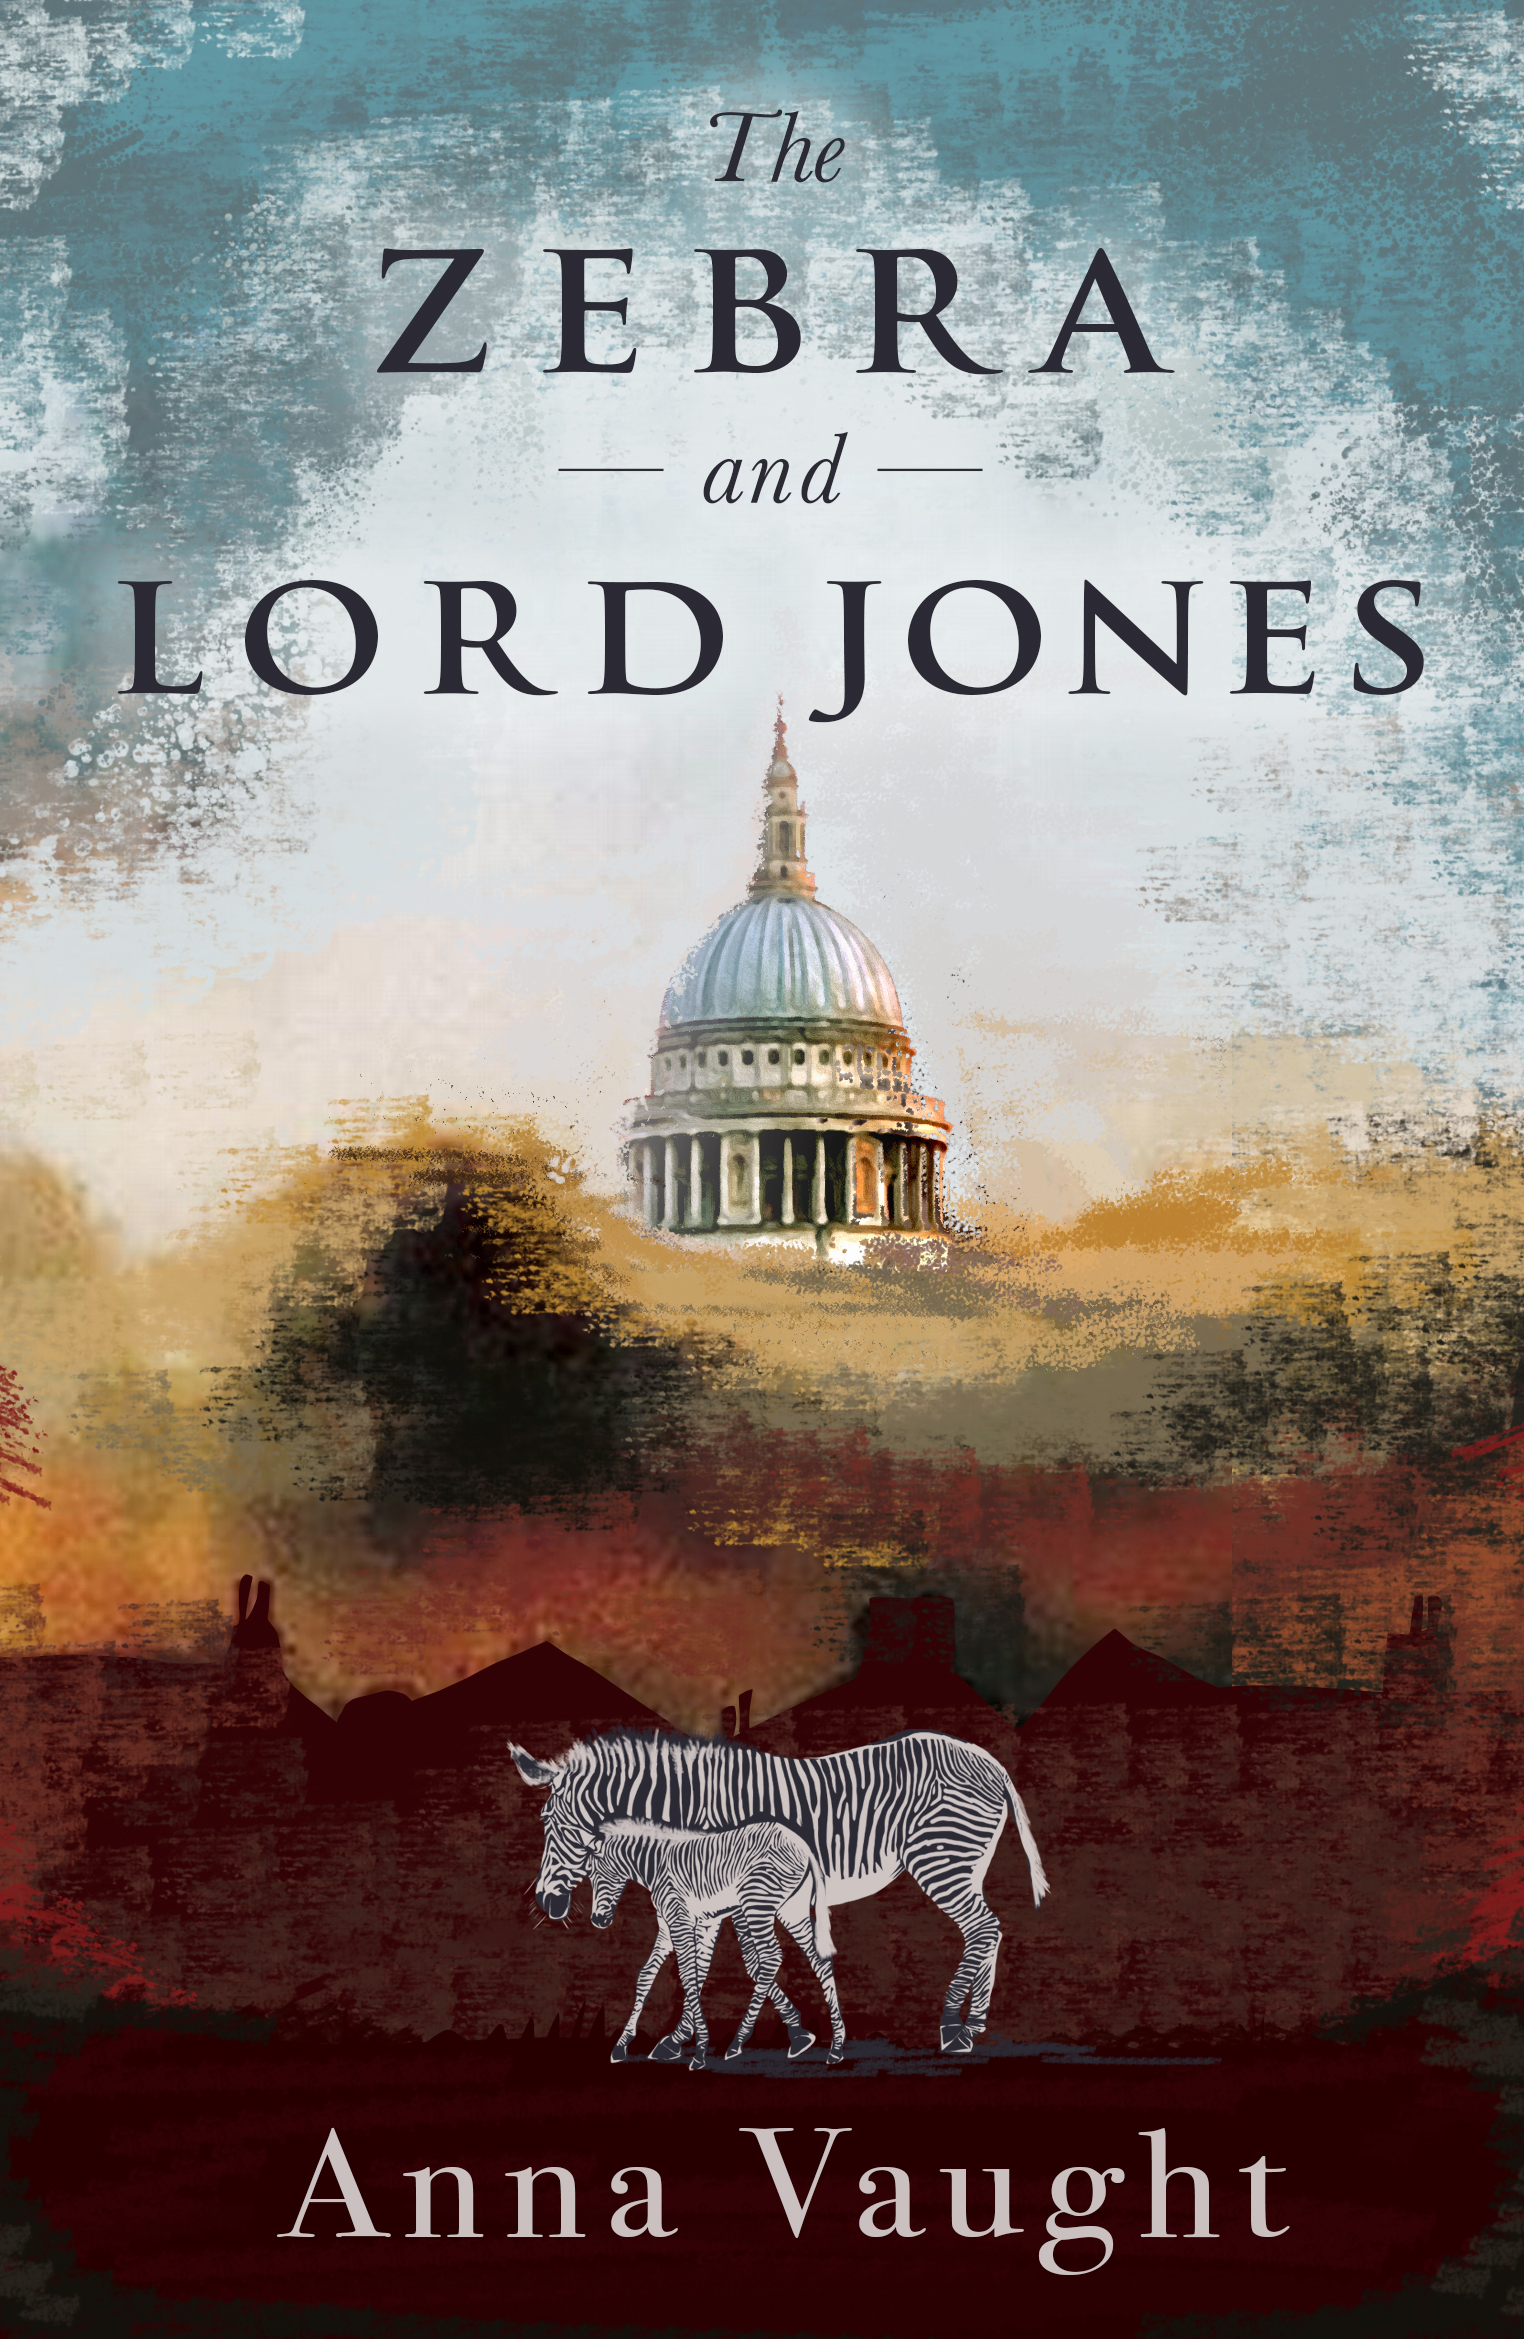 The Zebra and Lord Jones